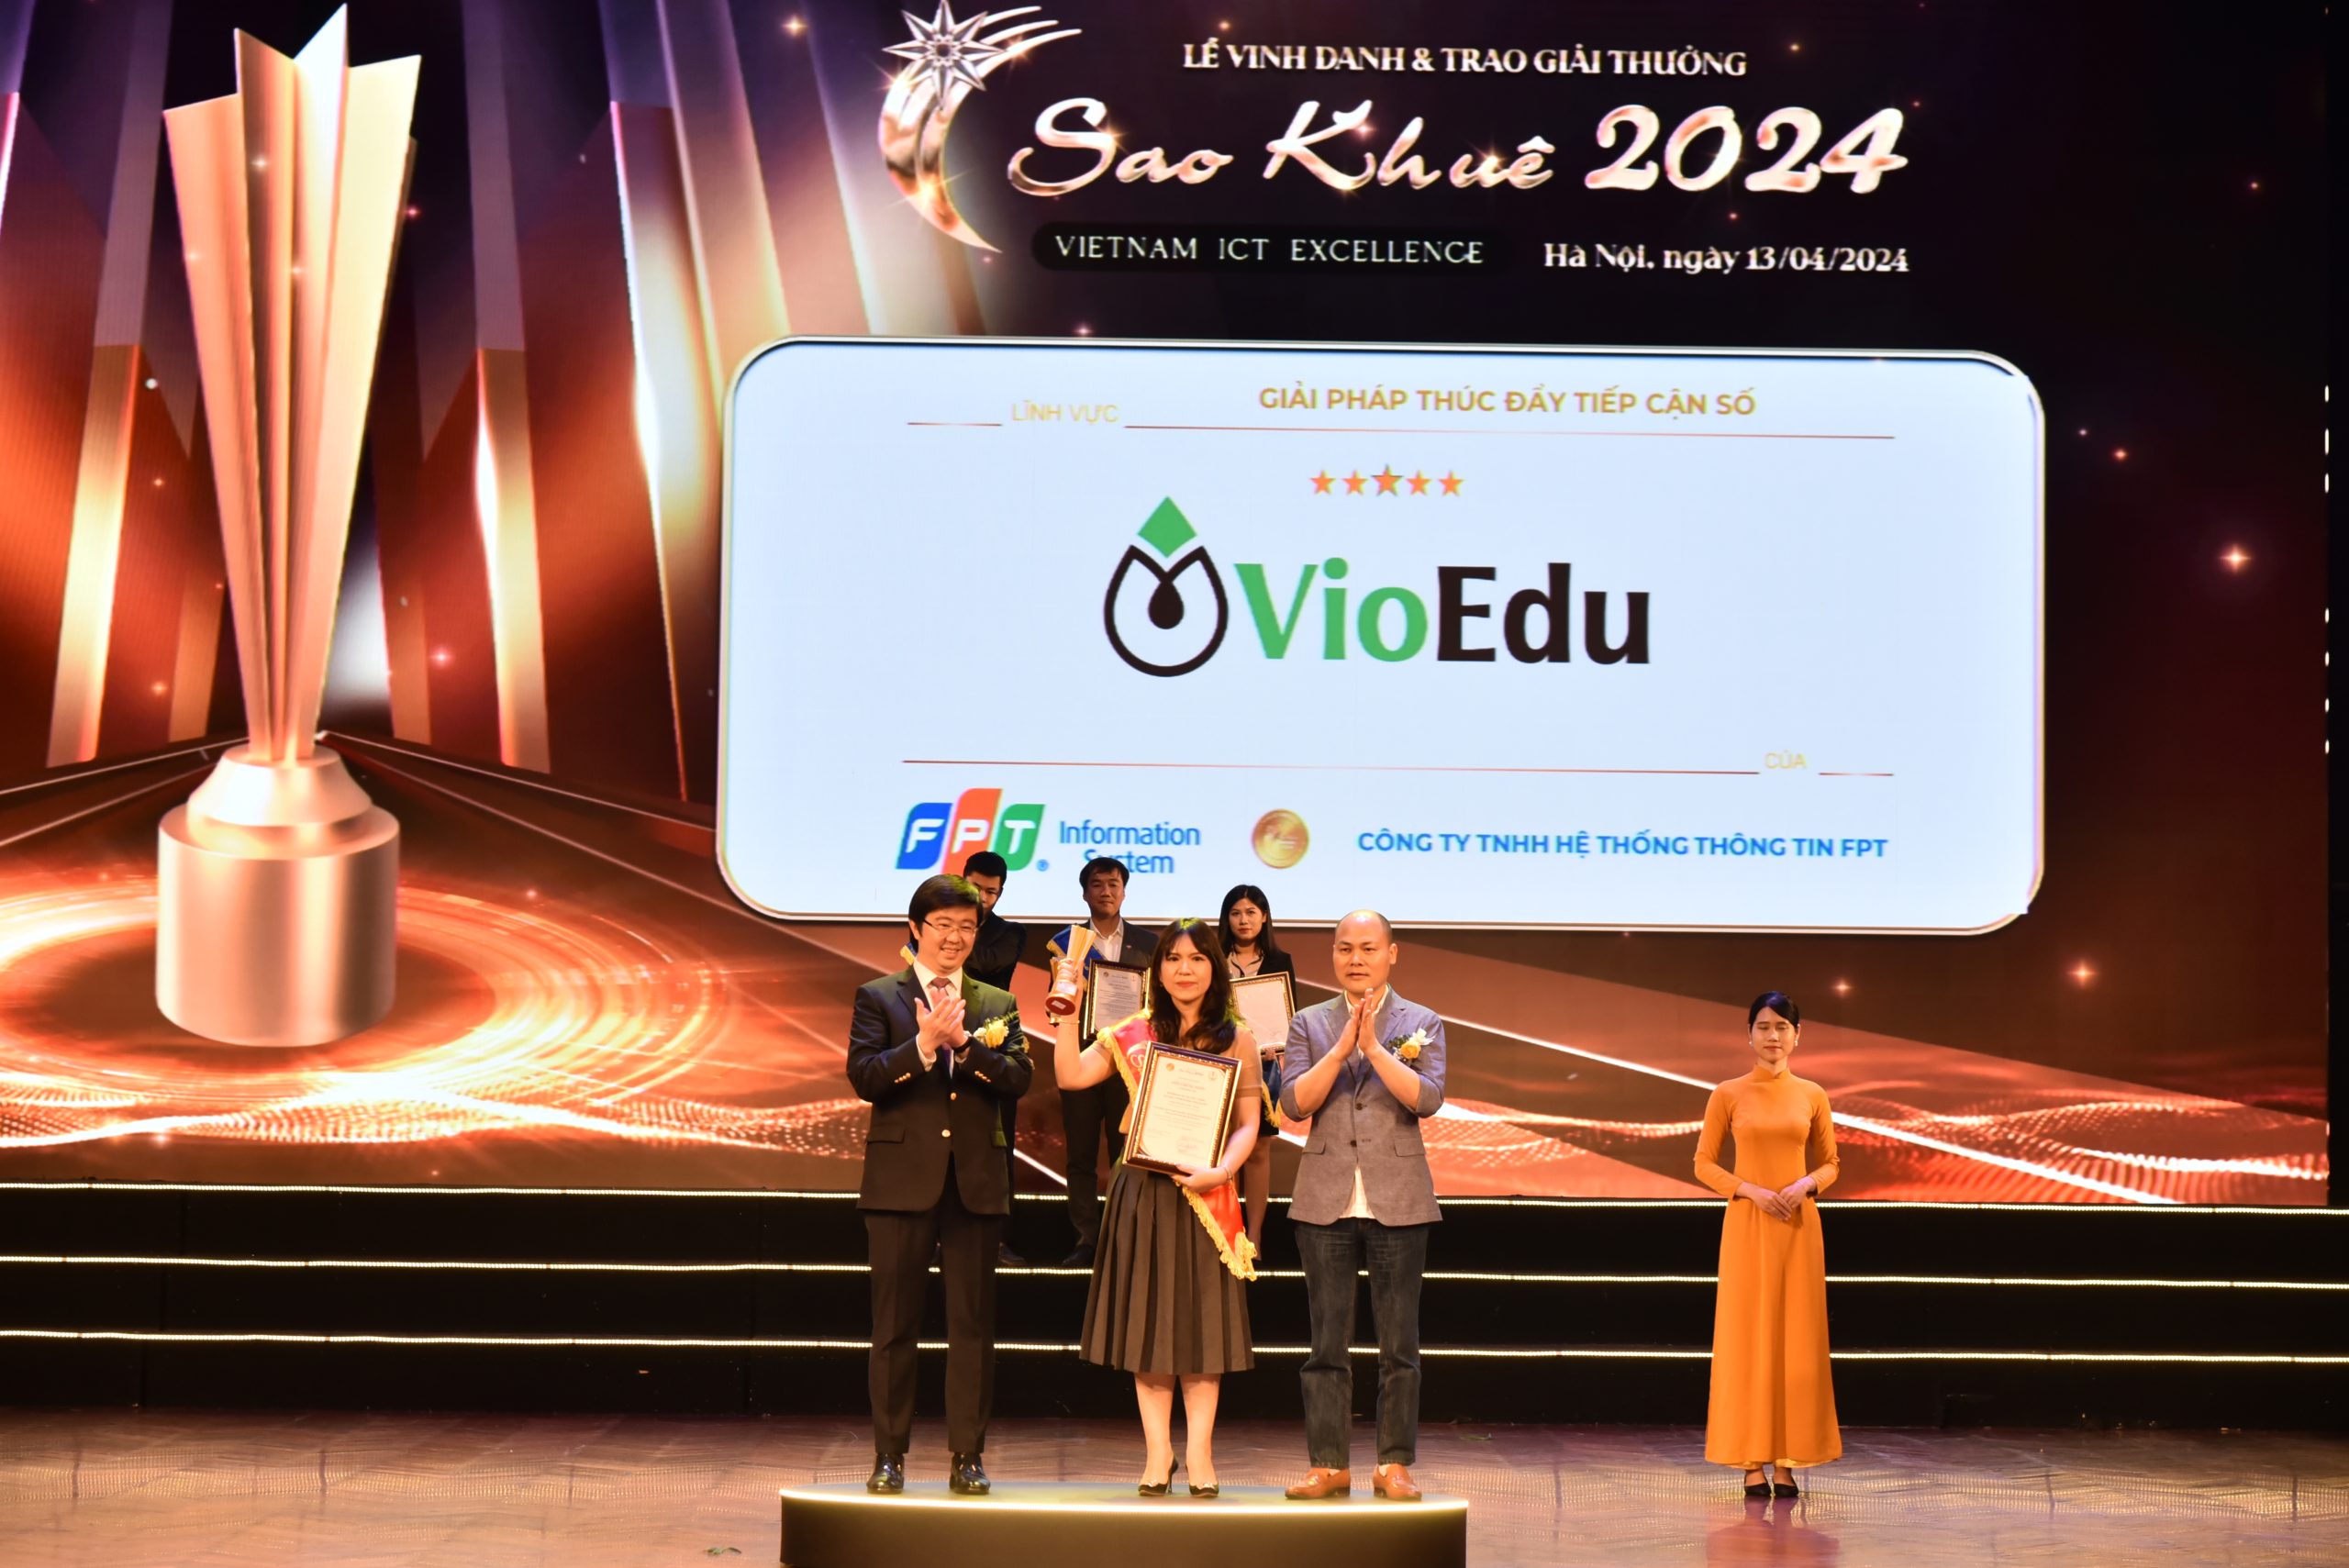 2024 Sao Khue Awards (Vietnam ICT Excellence) – 5-star – Online Education System (VioEdu)